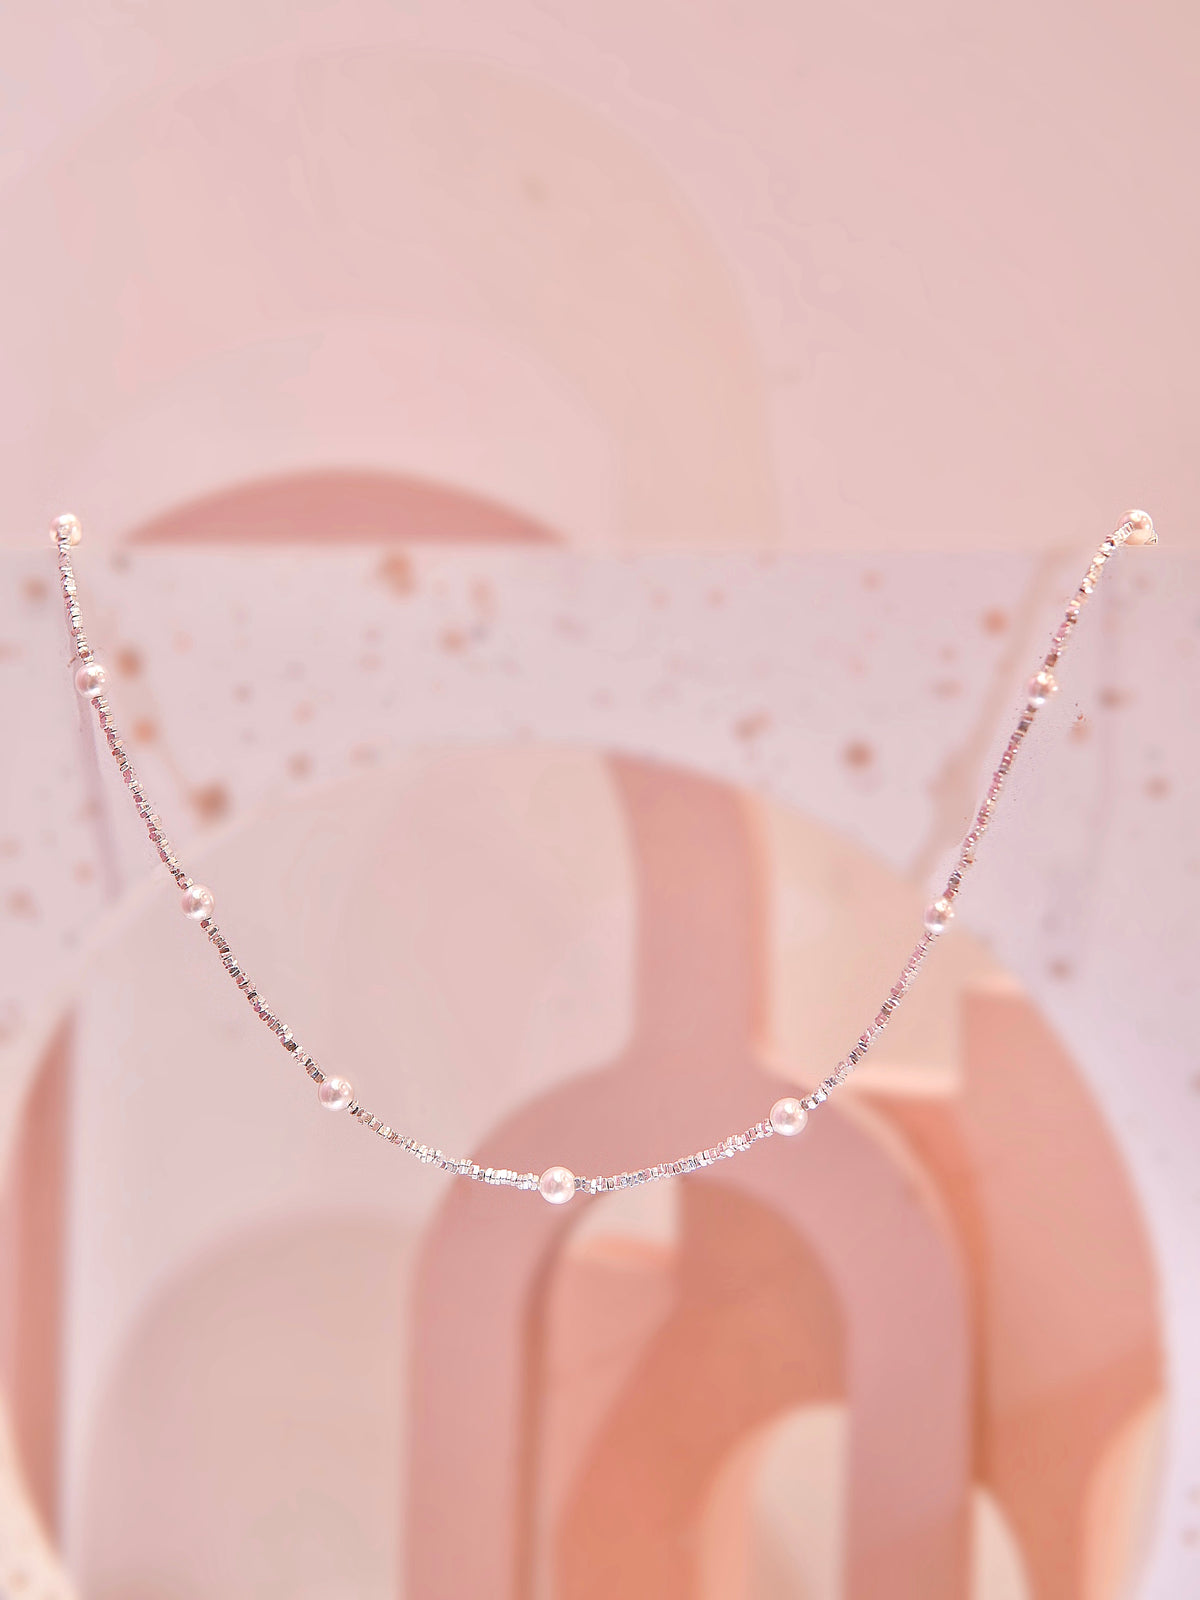 LAFIT · Moonlet - Necklace 不規則幾何鏈條時尚珍珠頸鏈